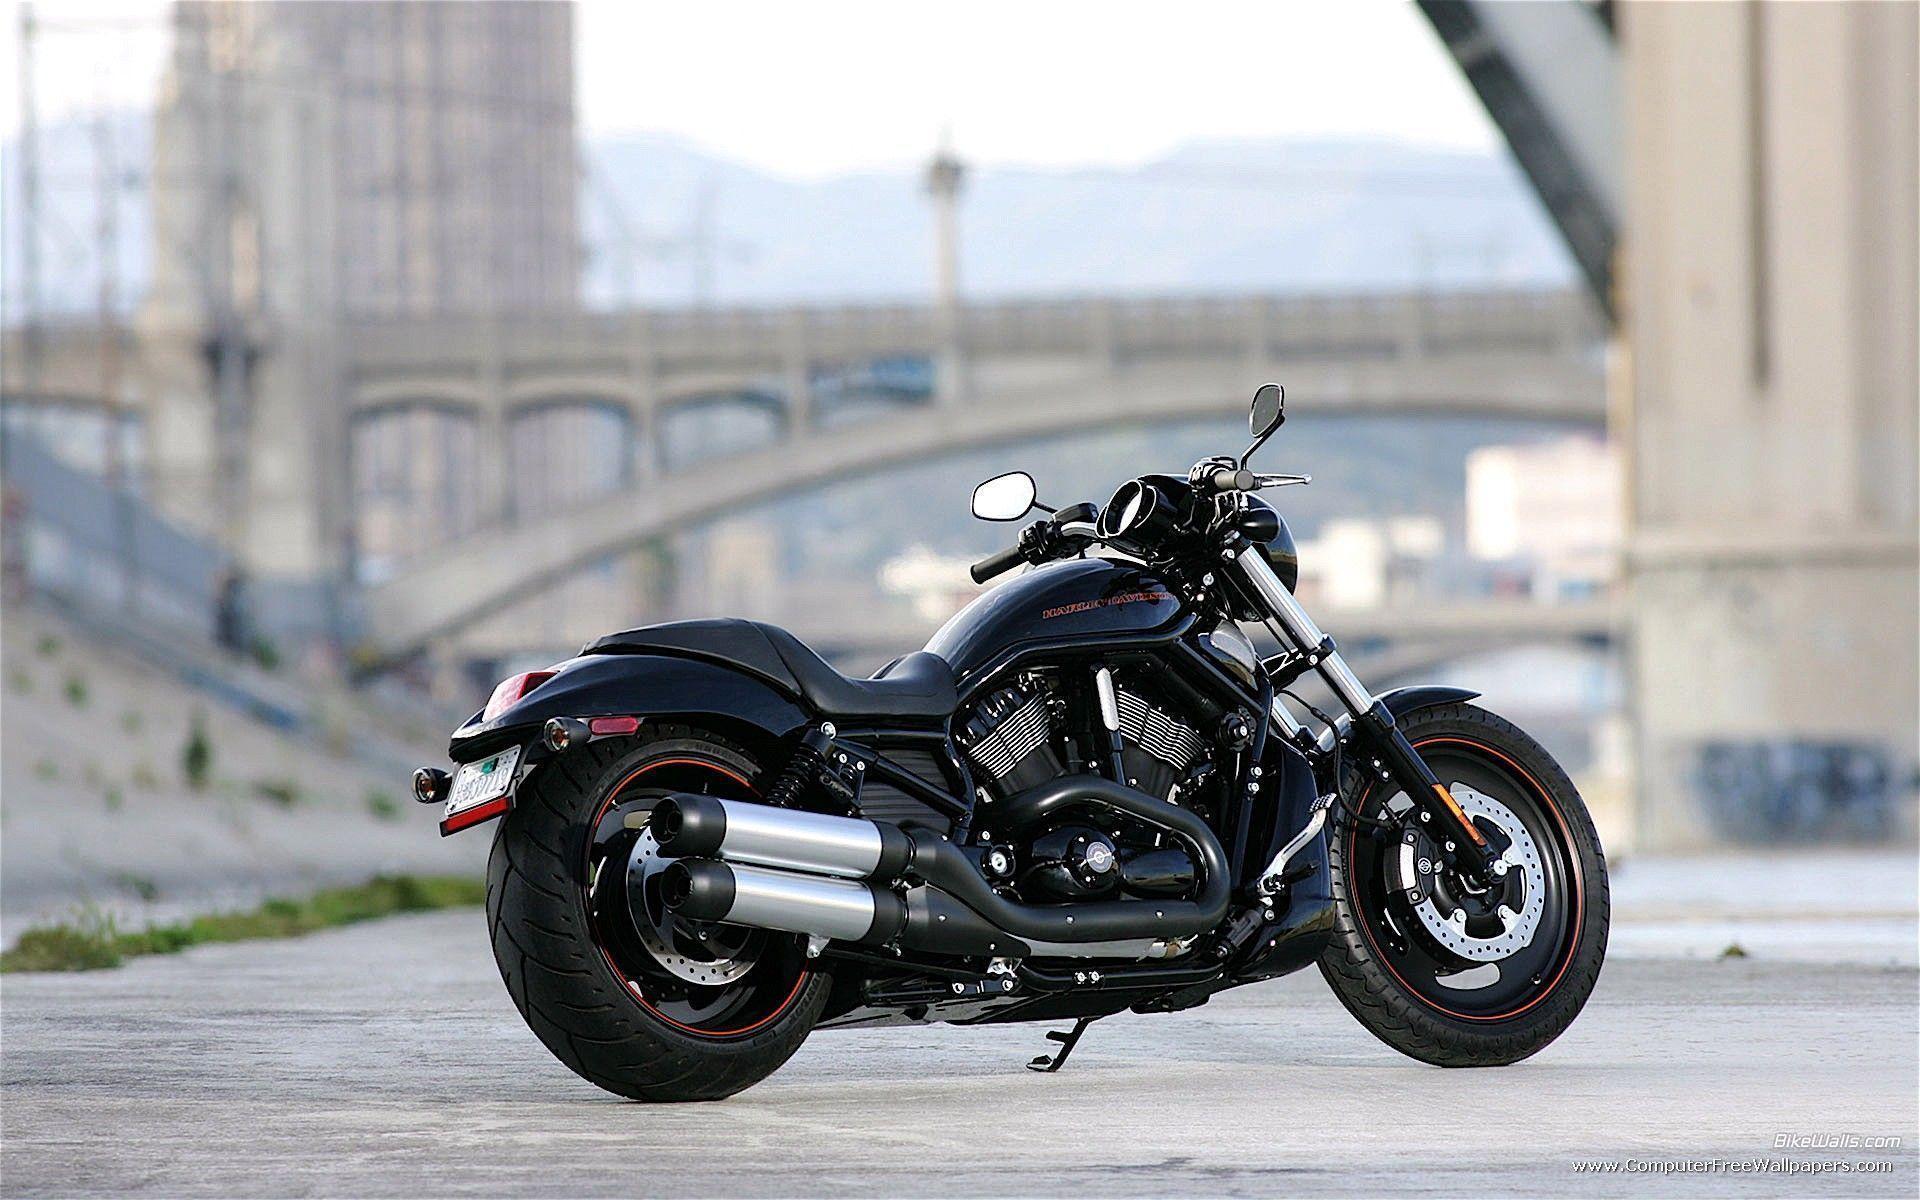 Harley Davidson Motorcycle Wallpaper HD. High Definition